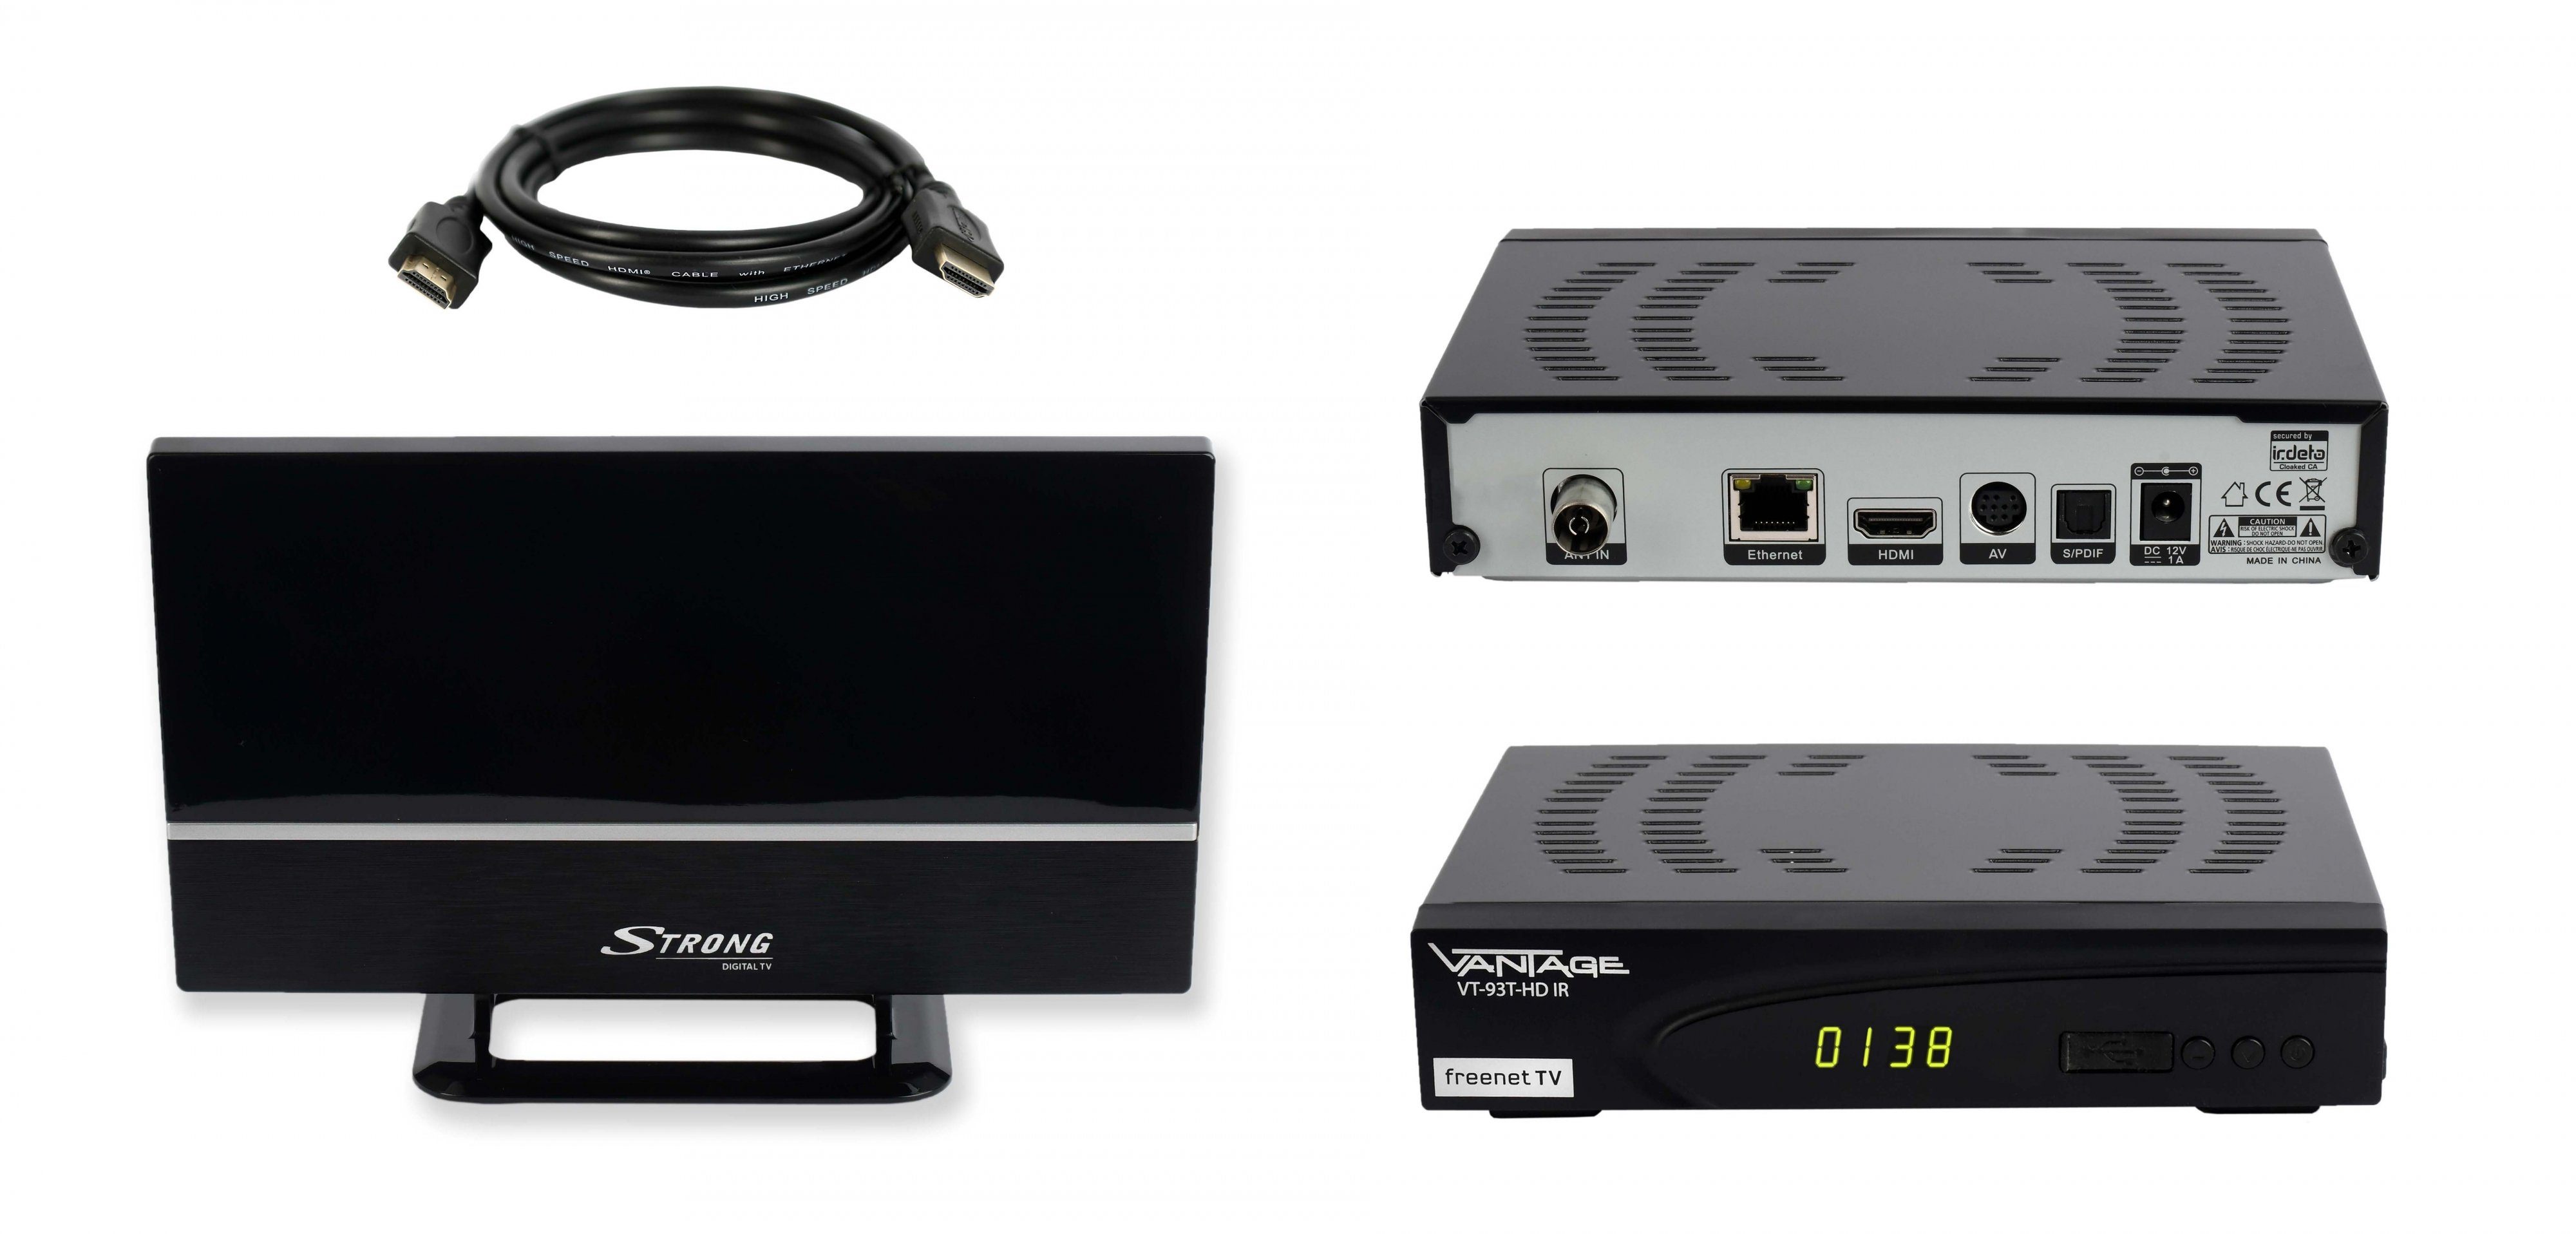 Vantage »VT-93 freenet TV, Full HD« DVB-T2 HD Receiver (PVR Funktion, 2m  HDMI Kabel, passive DVB-T Antenne)